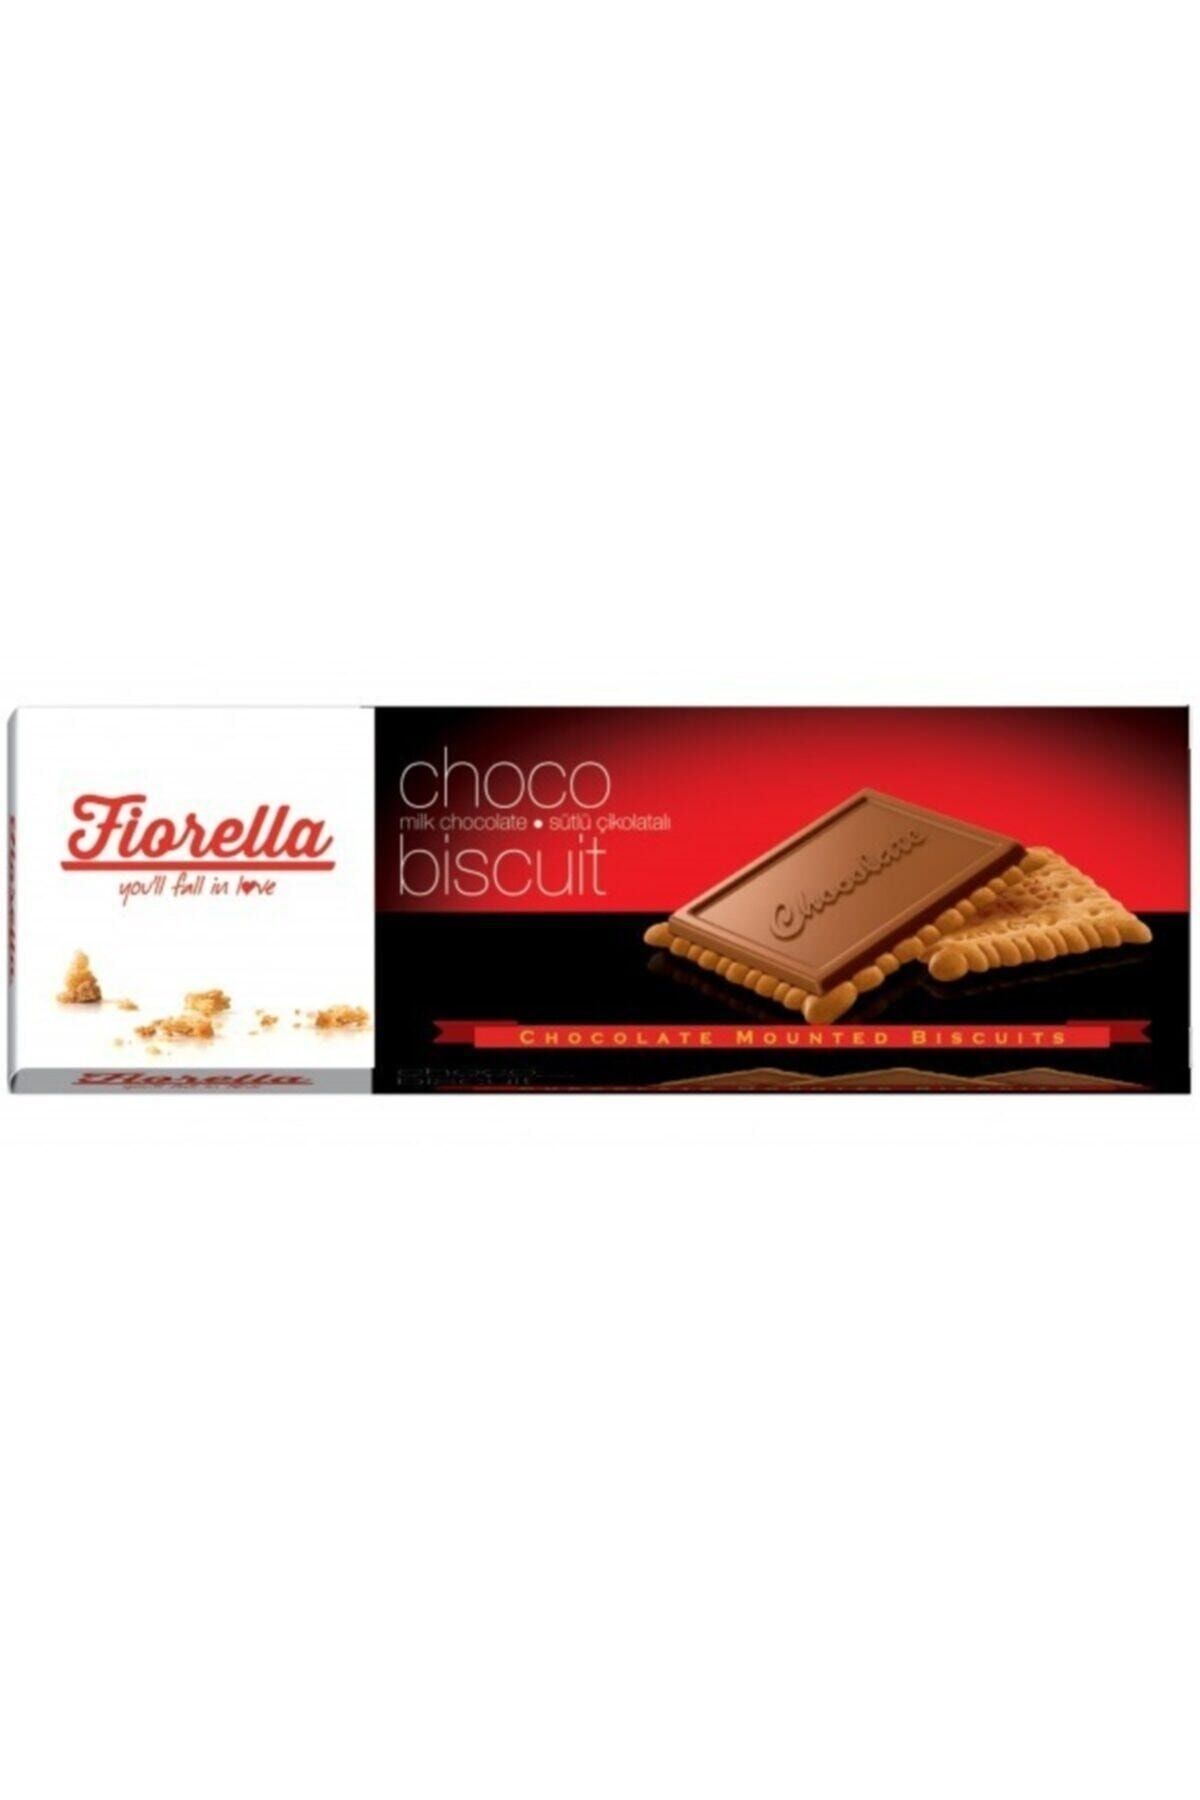 FIORELLA Chocobiscuit Sütlü Çikolatalı Bisküvi 102 Gr. 1 Adet